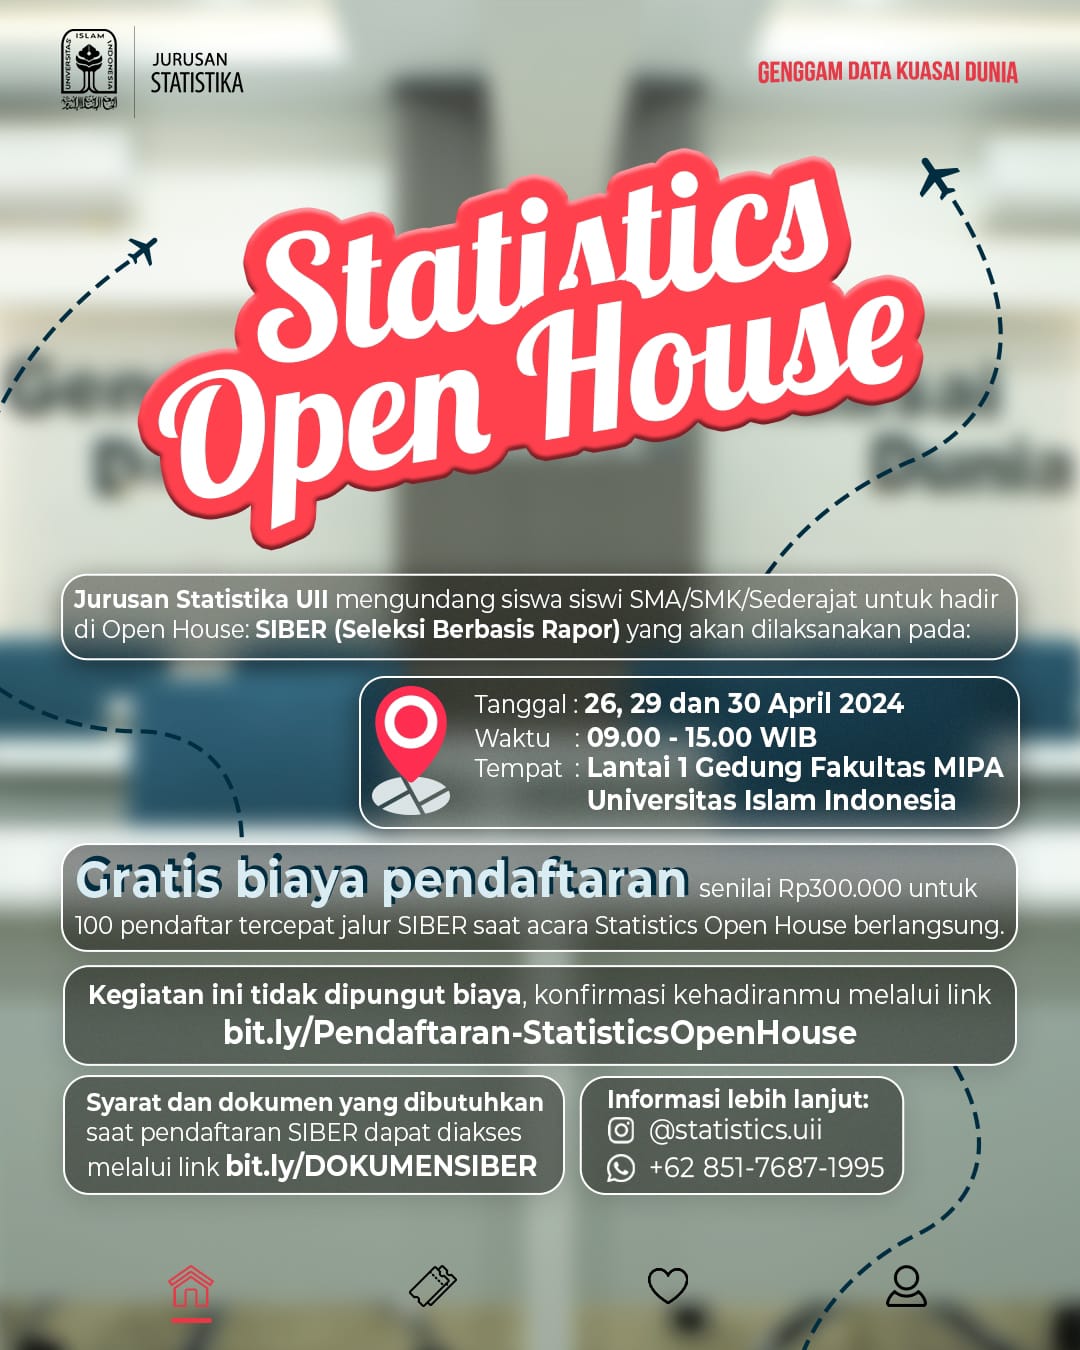 STATISTICS OPEN HOUSE – SIBER (Seleksi Berbasis Rapor)